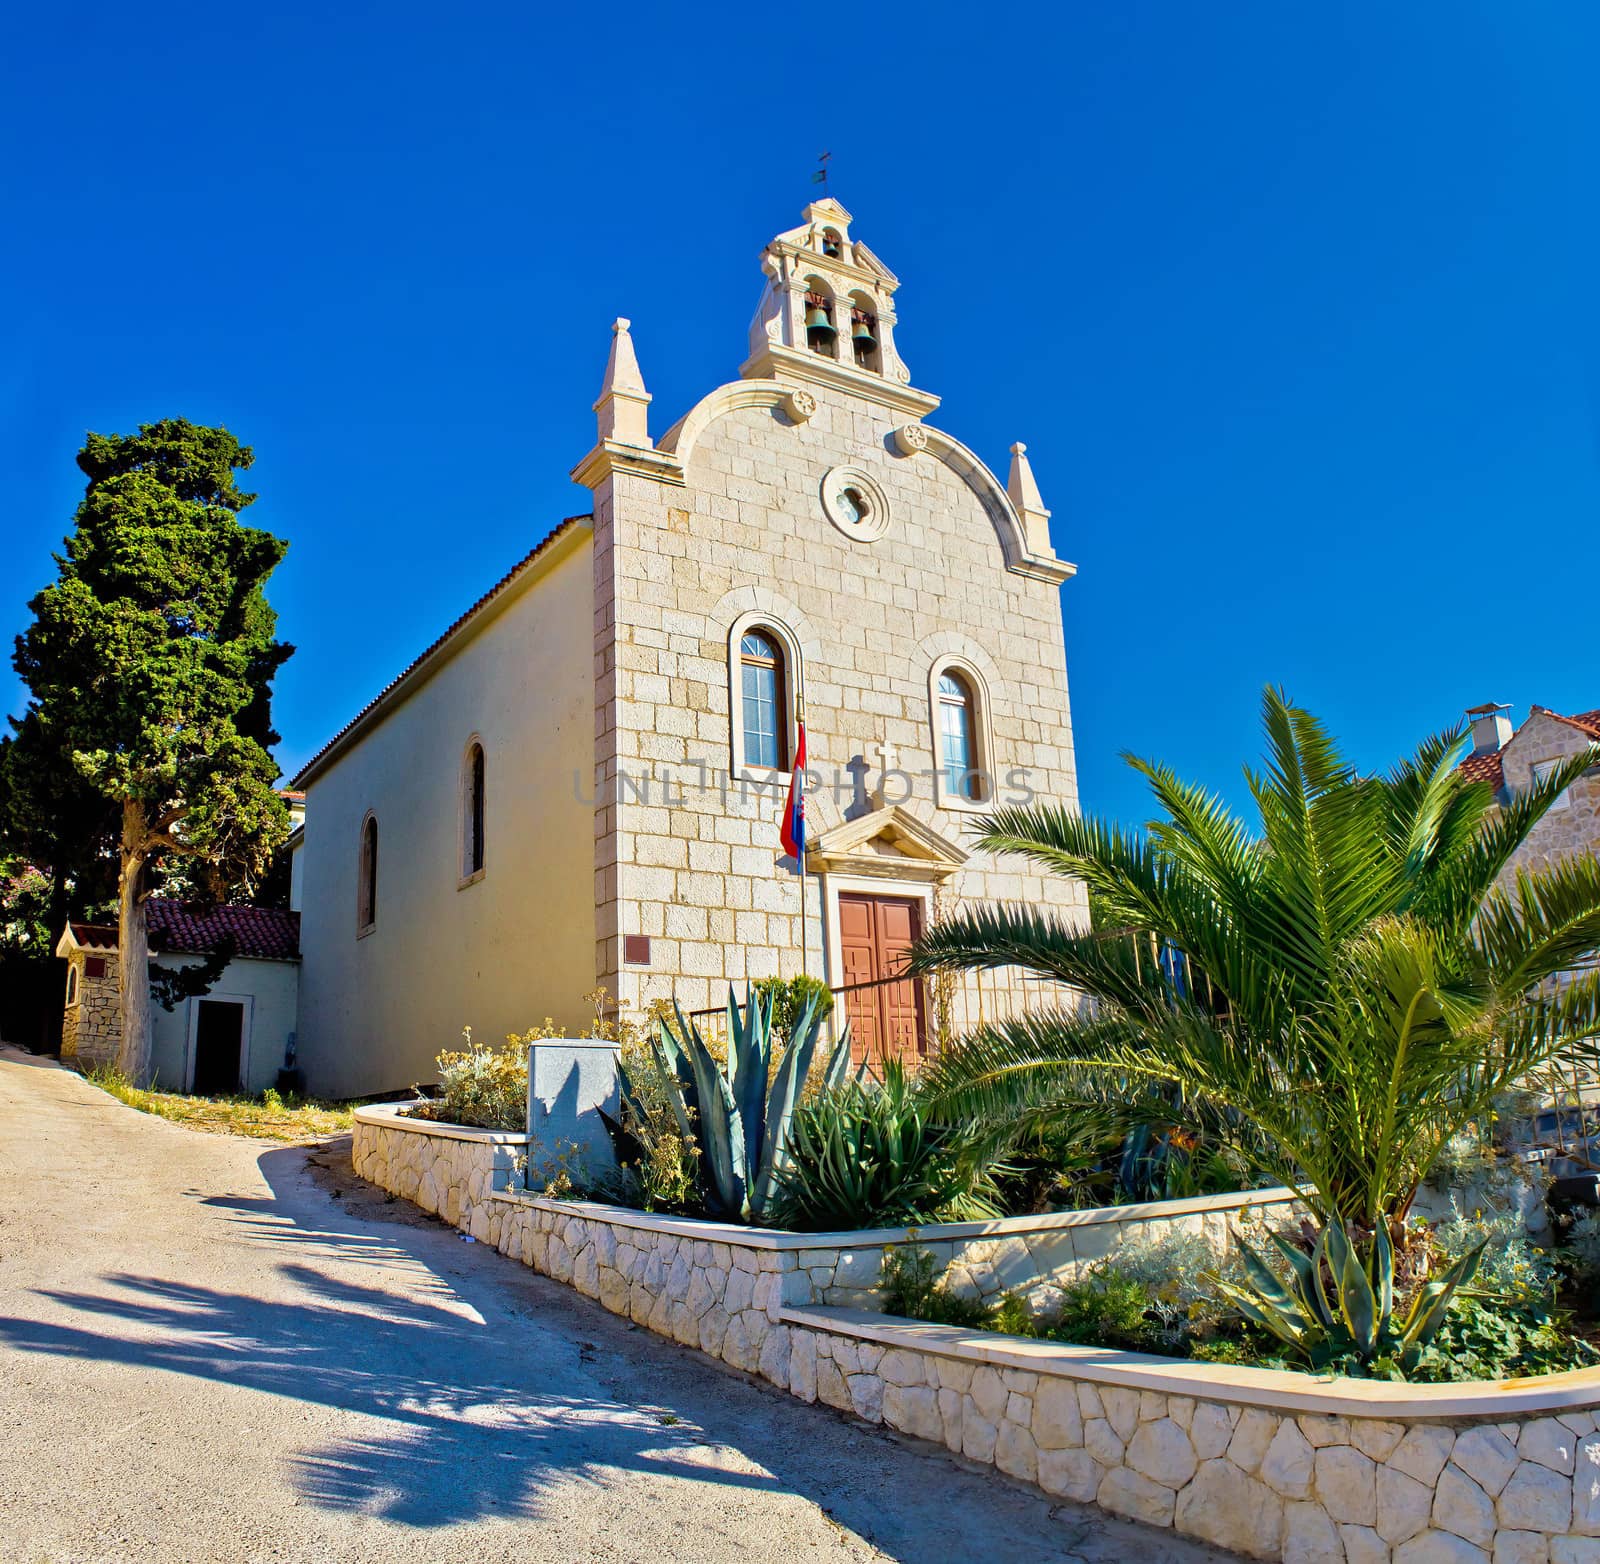 Town of Tribunj stone church, Dalmatia, Croatia